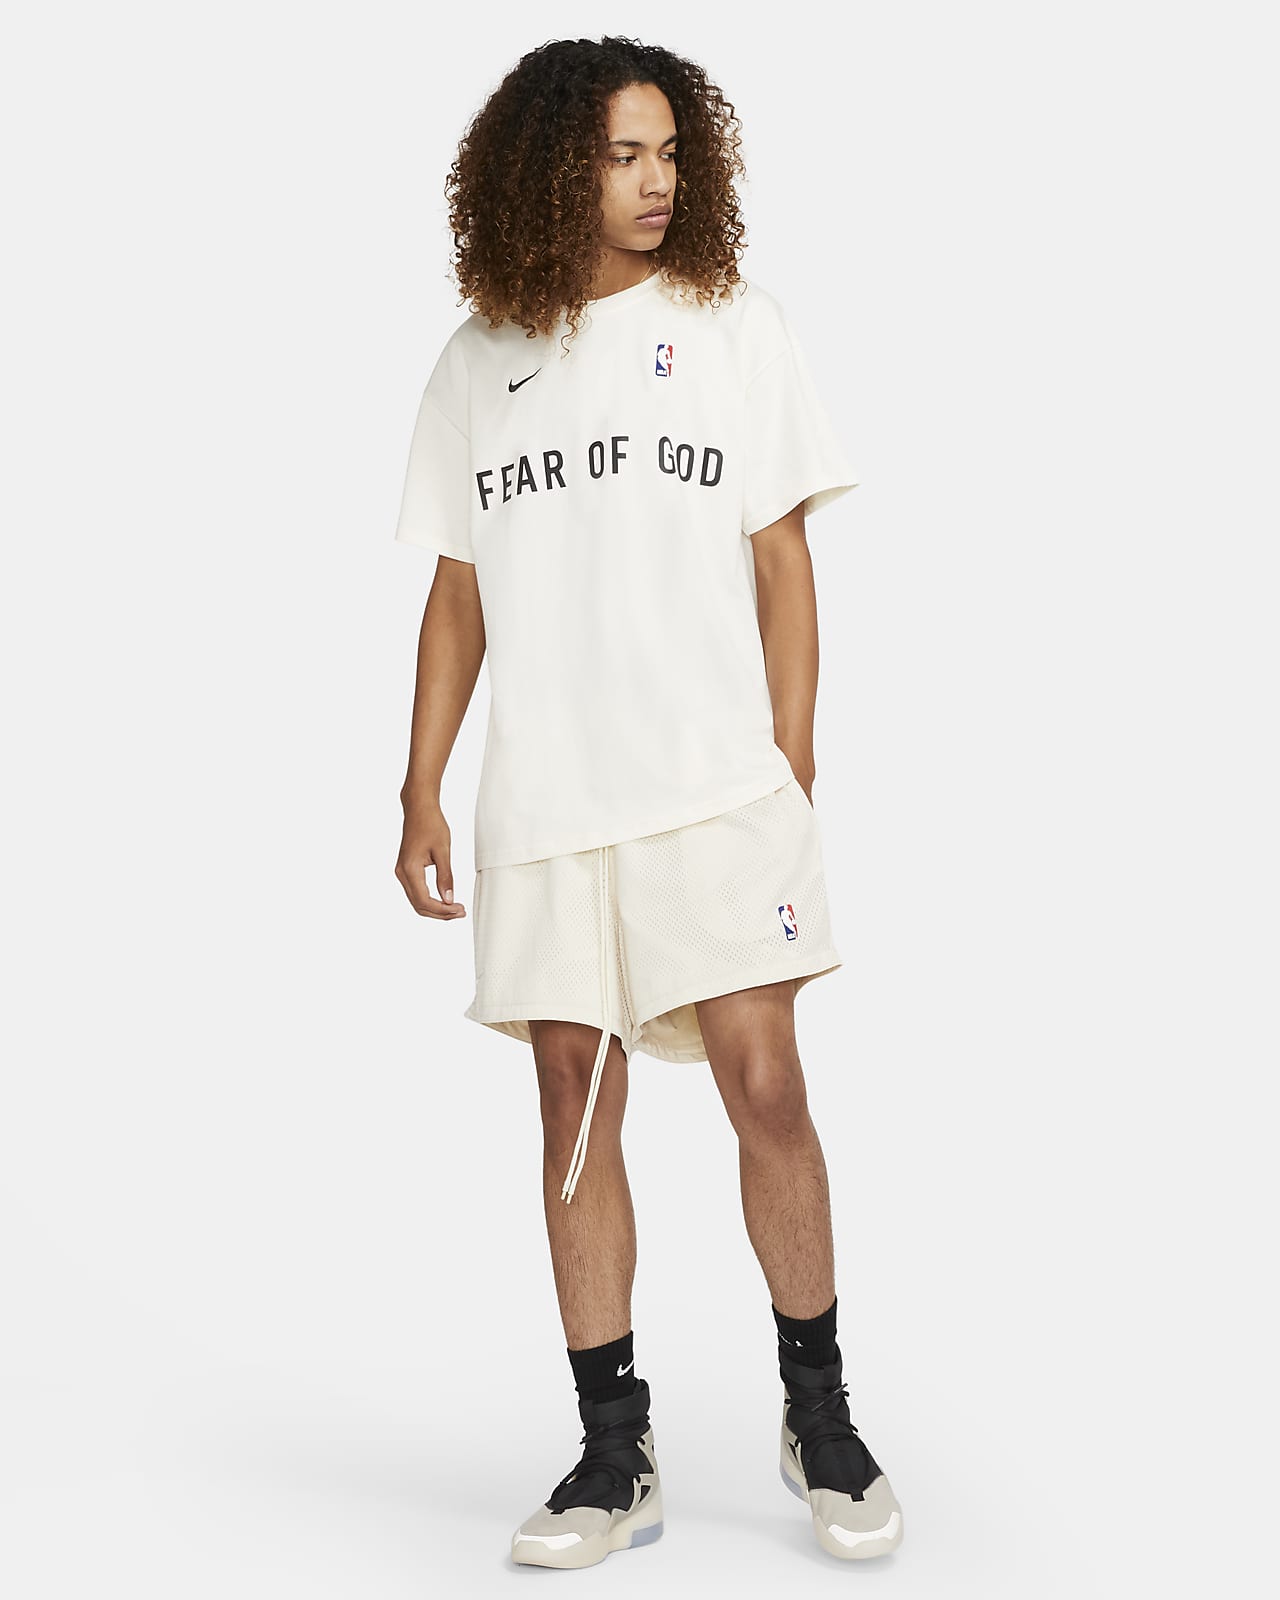 Nike x Fear of God Basketball Shorts 